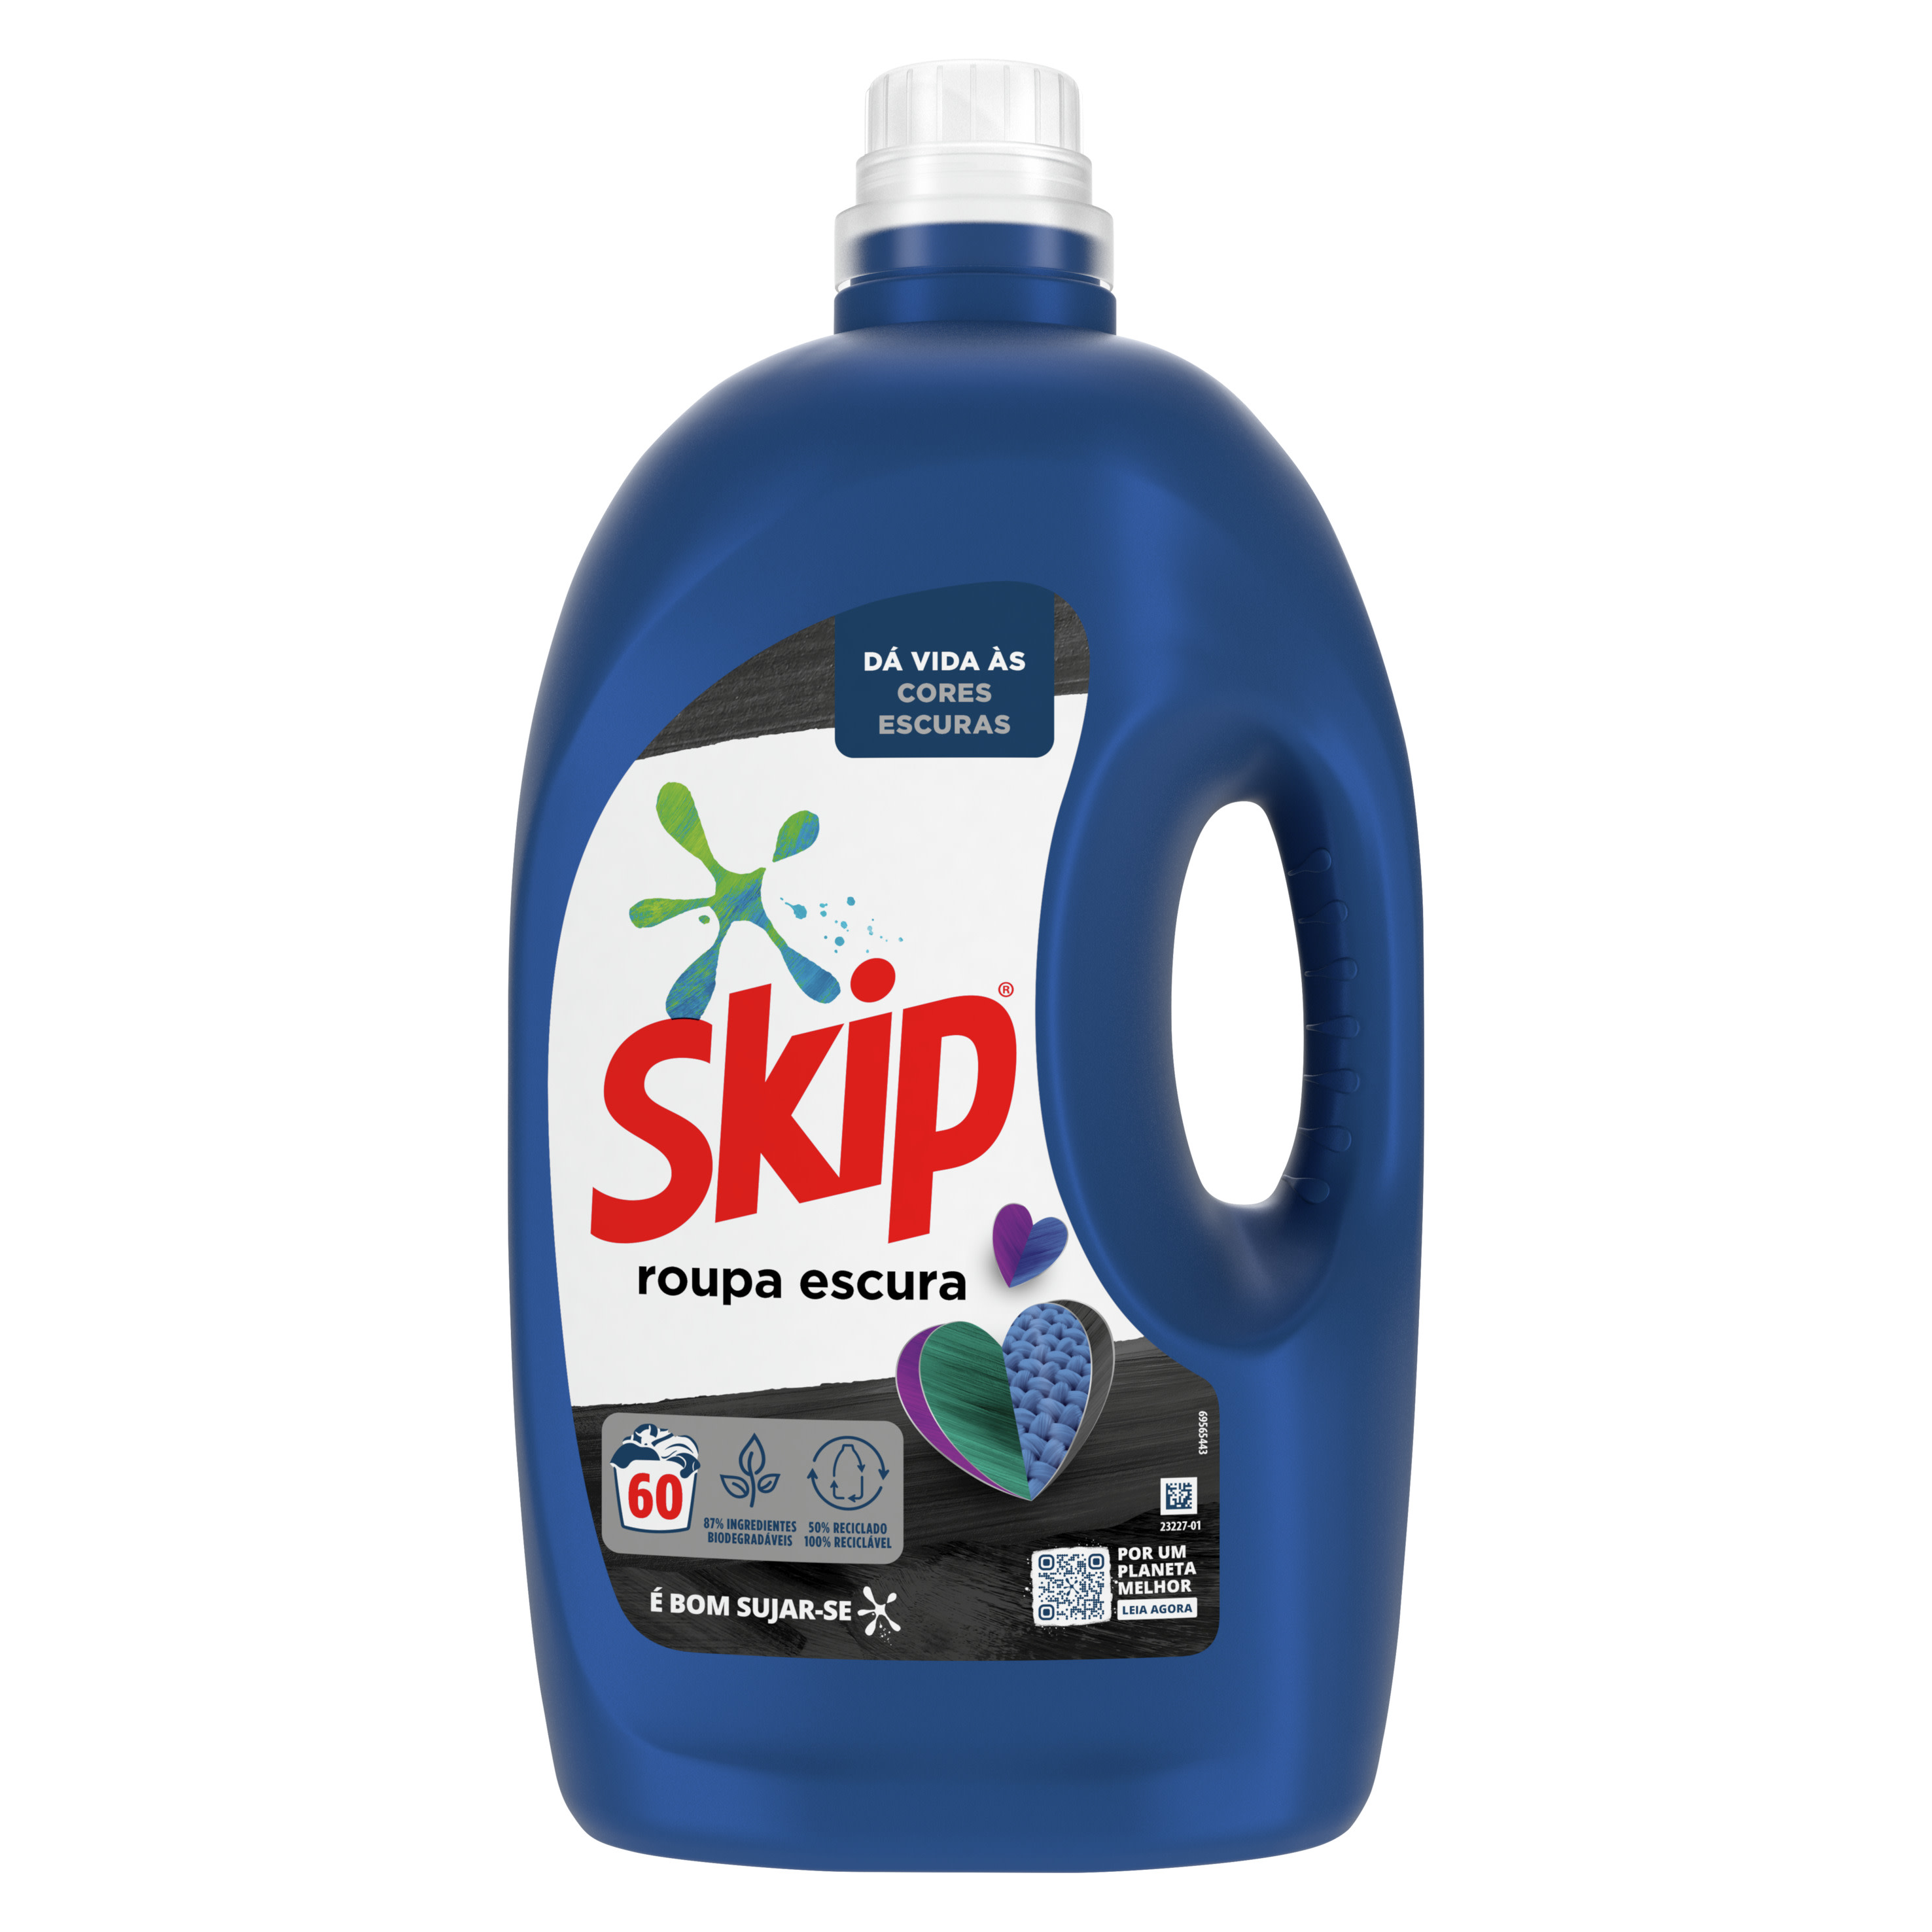 SKIP Detergente Líquido Roupa Escura packshot